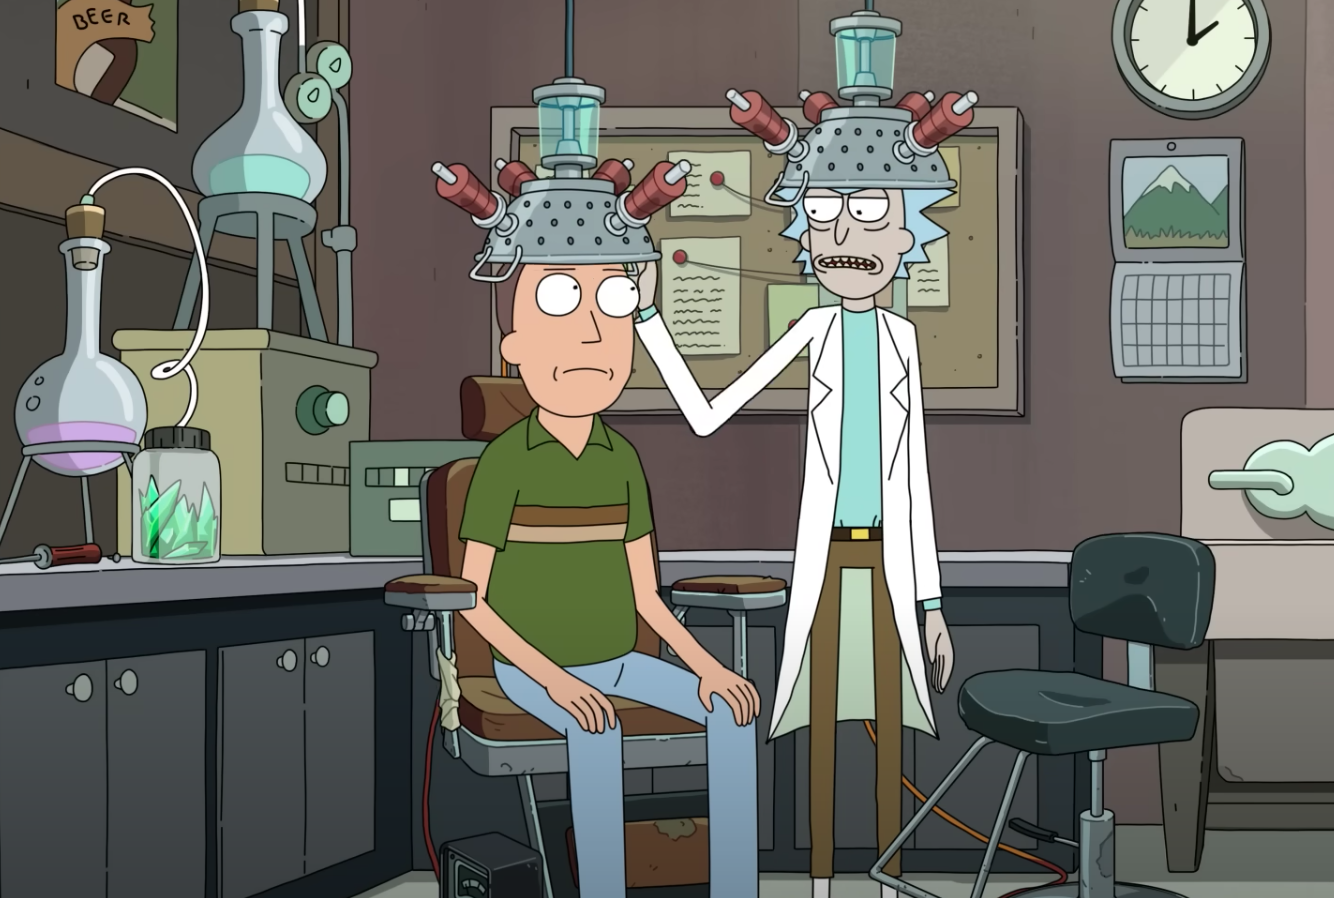 Watch Rick and Morty season 4 finale online: Stream Adult Swim